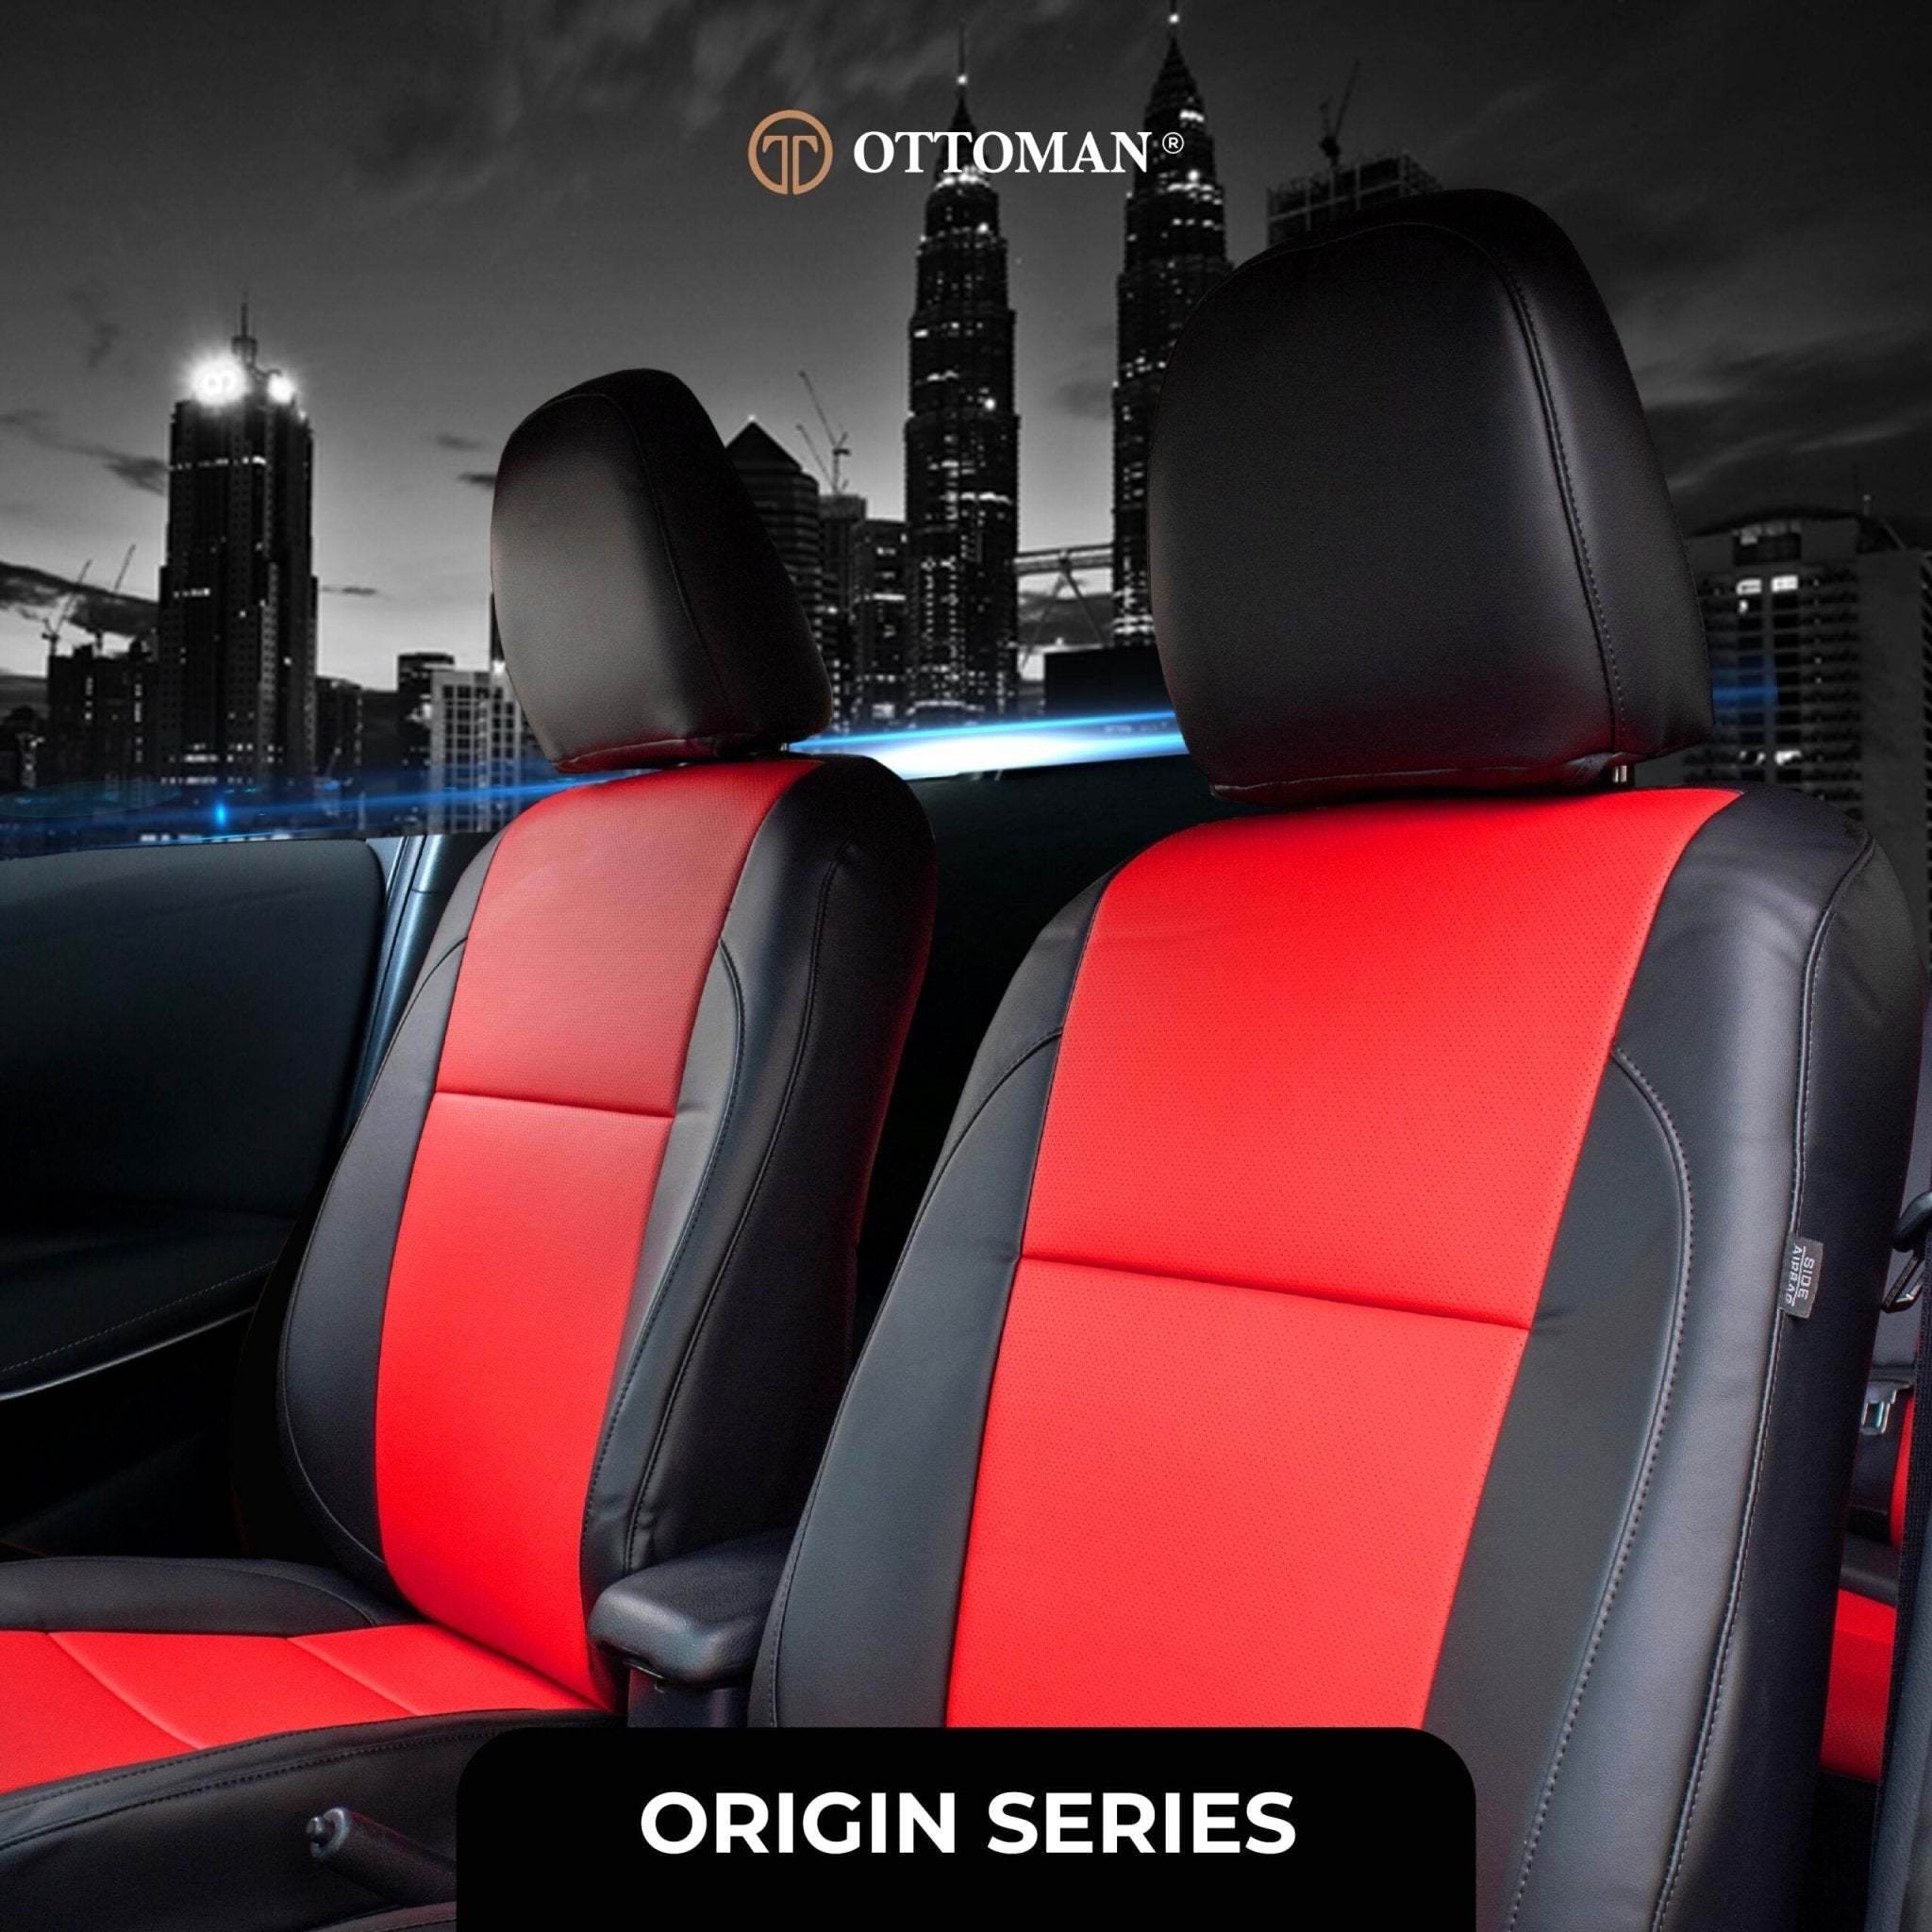 Proton Persona (2007-2016) Ottoman Seat Cover Seat Cover in Klang Selangor, Penang, Johor Bahru - Ottoman Car Mats